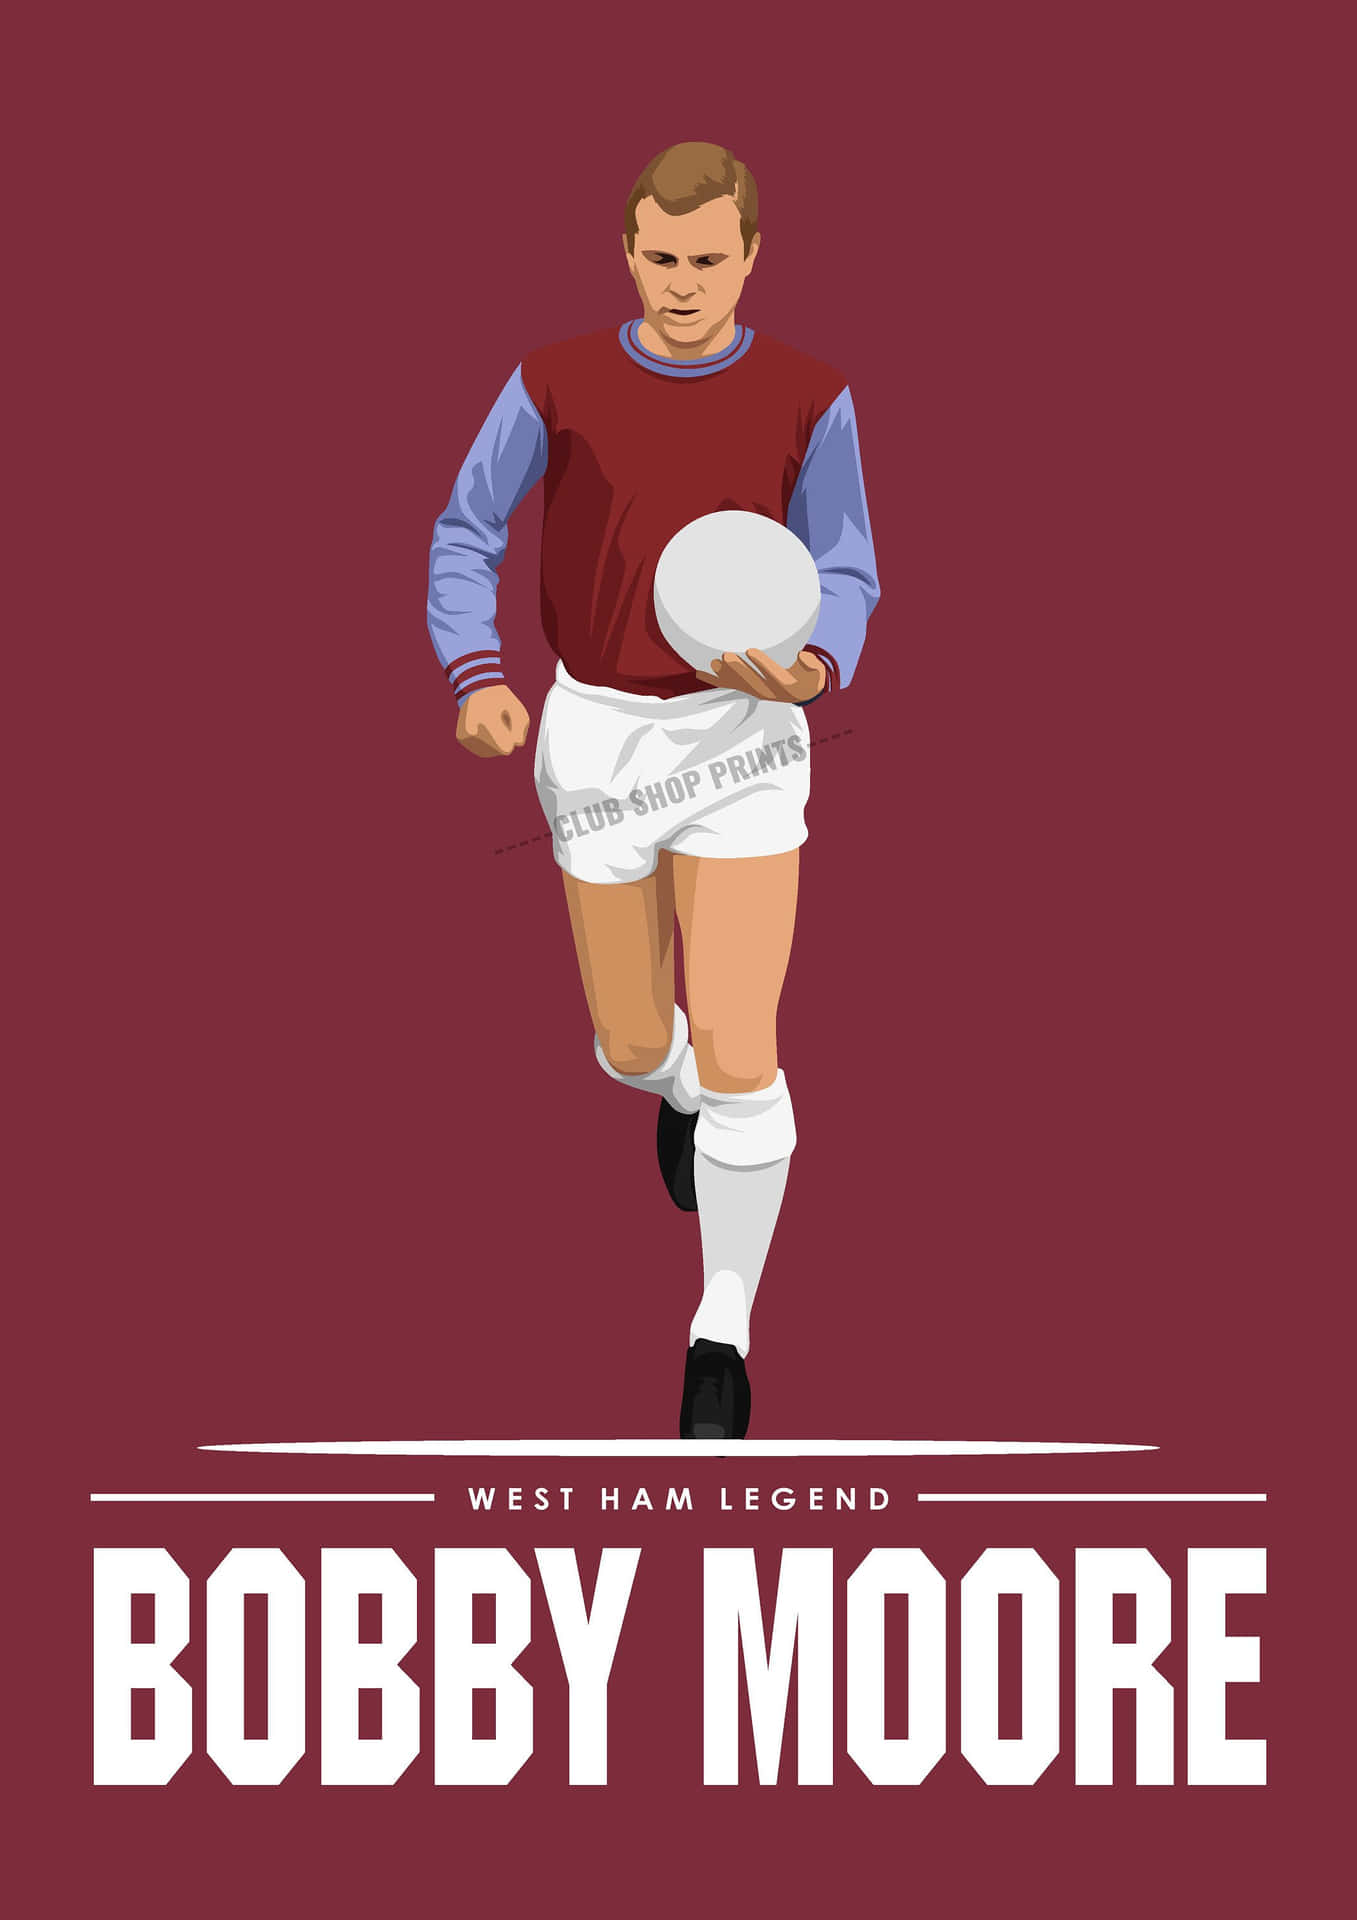 West Ham Legend Bobby Moore Wallpaper